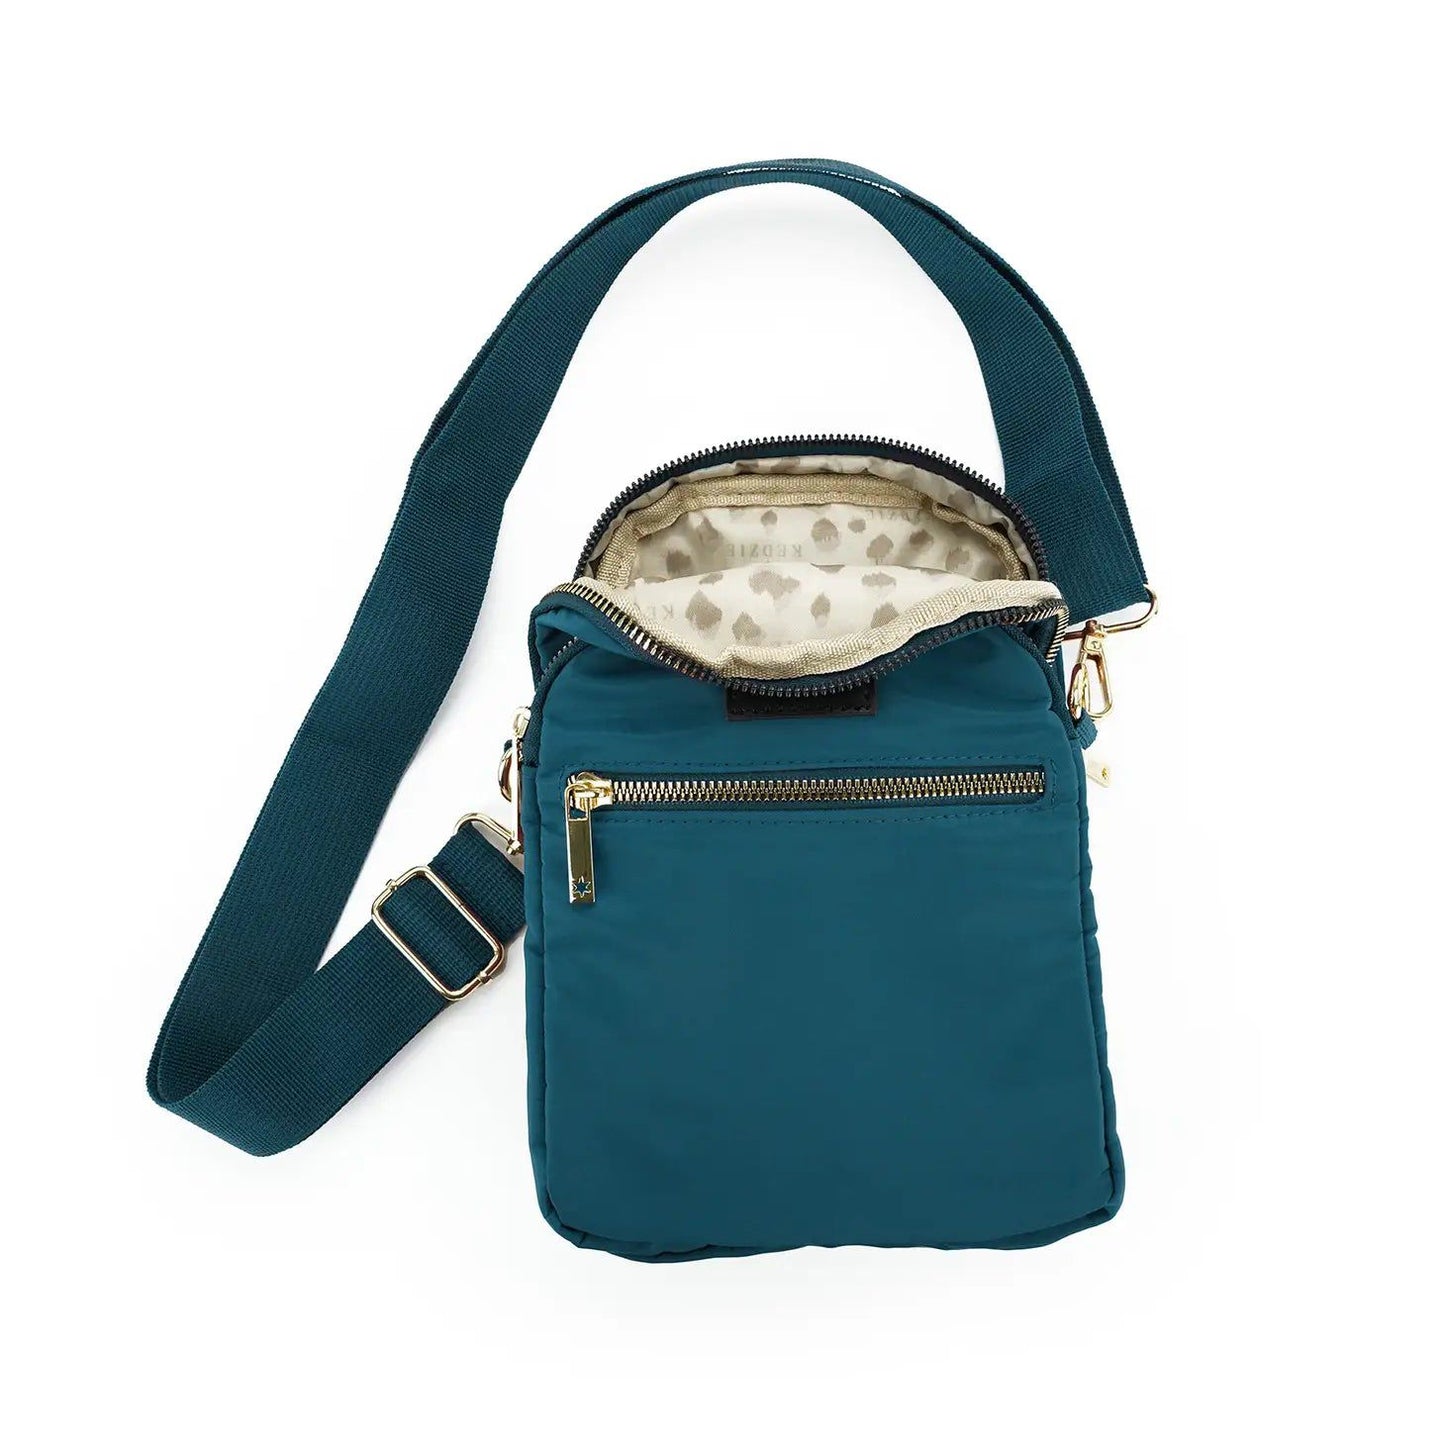 Kedzie Roundtrip Convertible Sling Bag-accessories > Apparel & Accessories > Handbags, Wallets & Cases > Handbags-Quinn's Mercantile